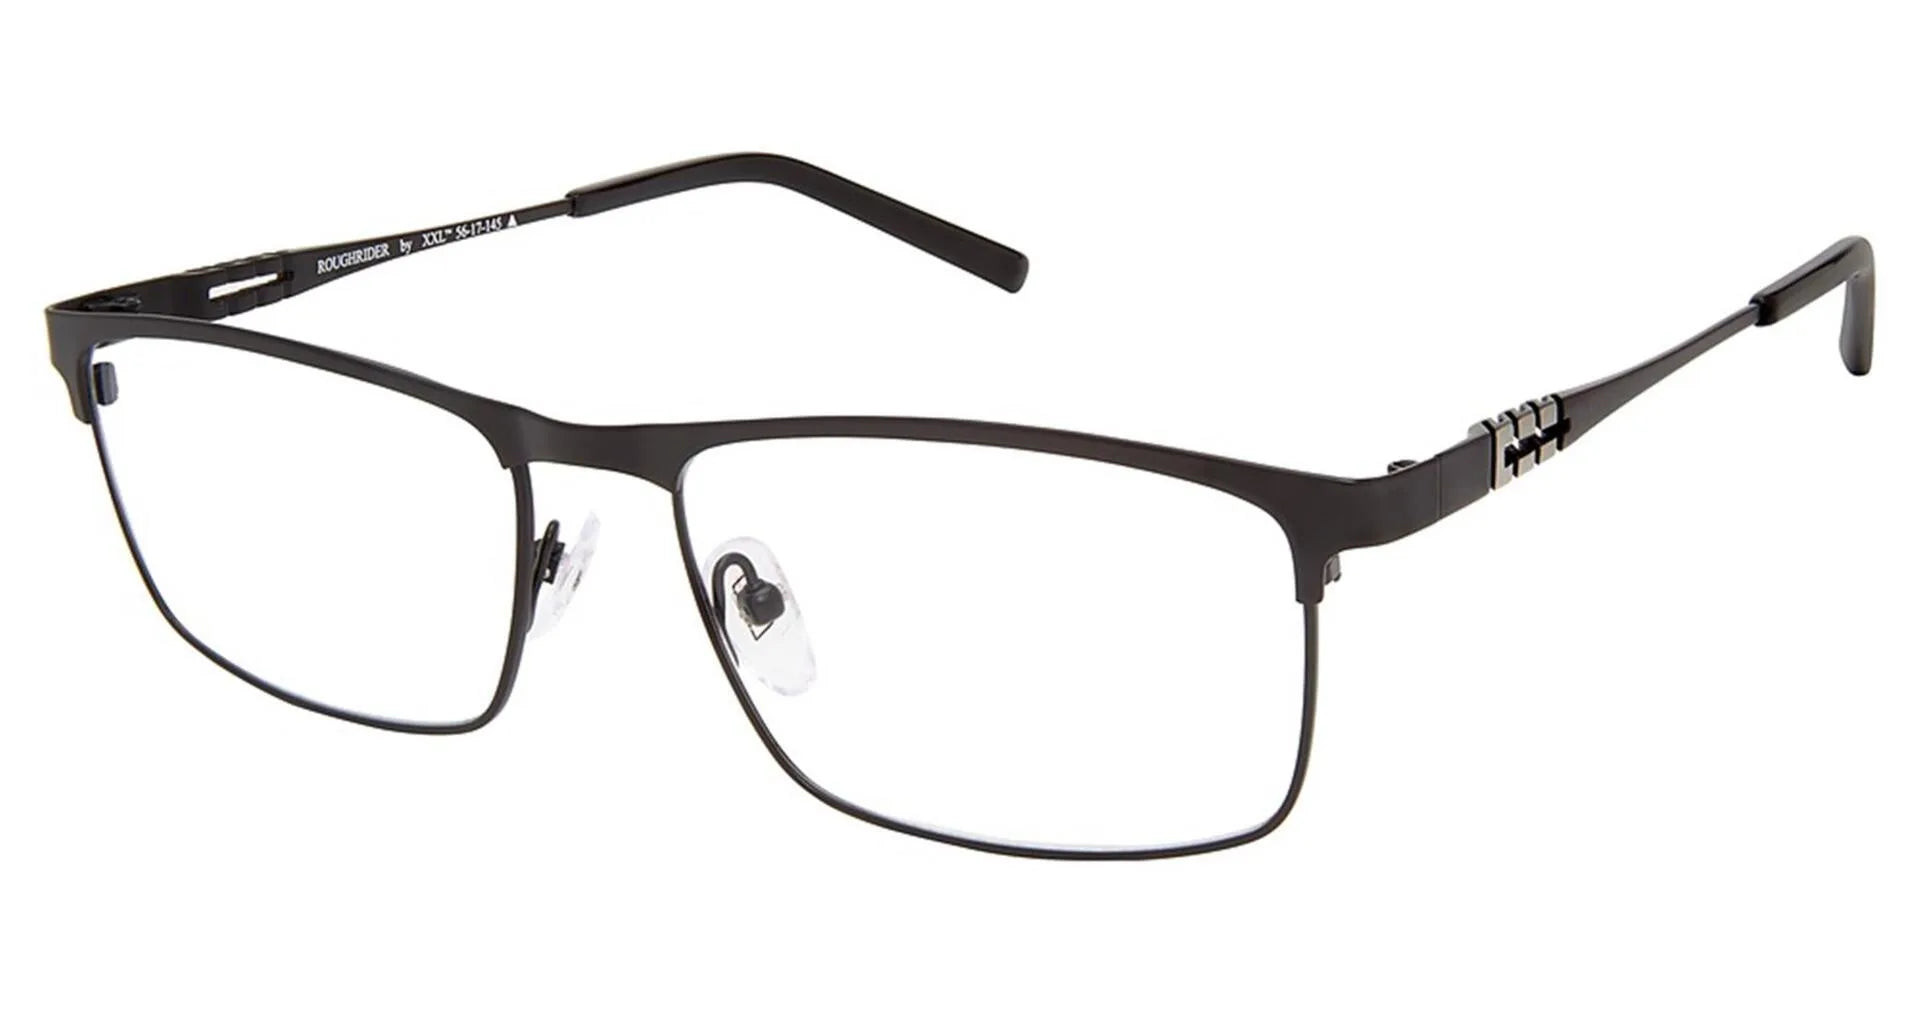 XXL Eyewear Roughrider Eyeglasses Black